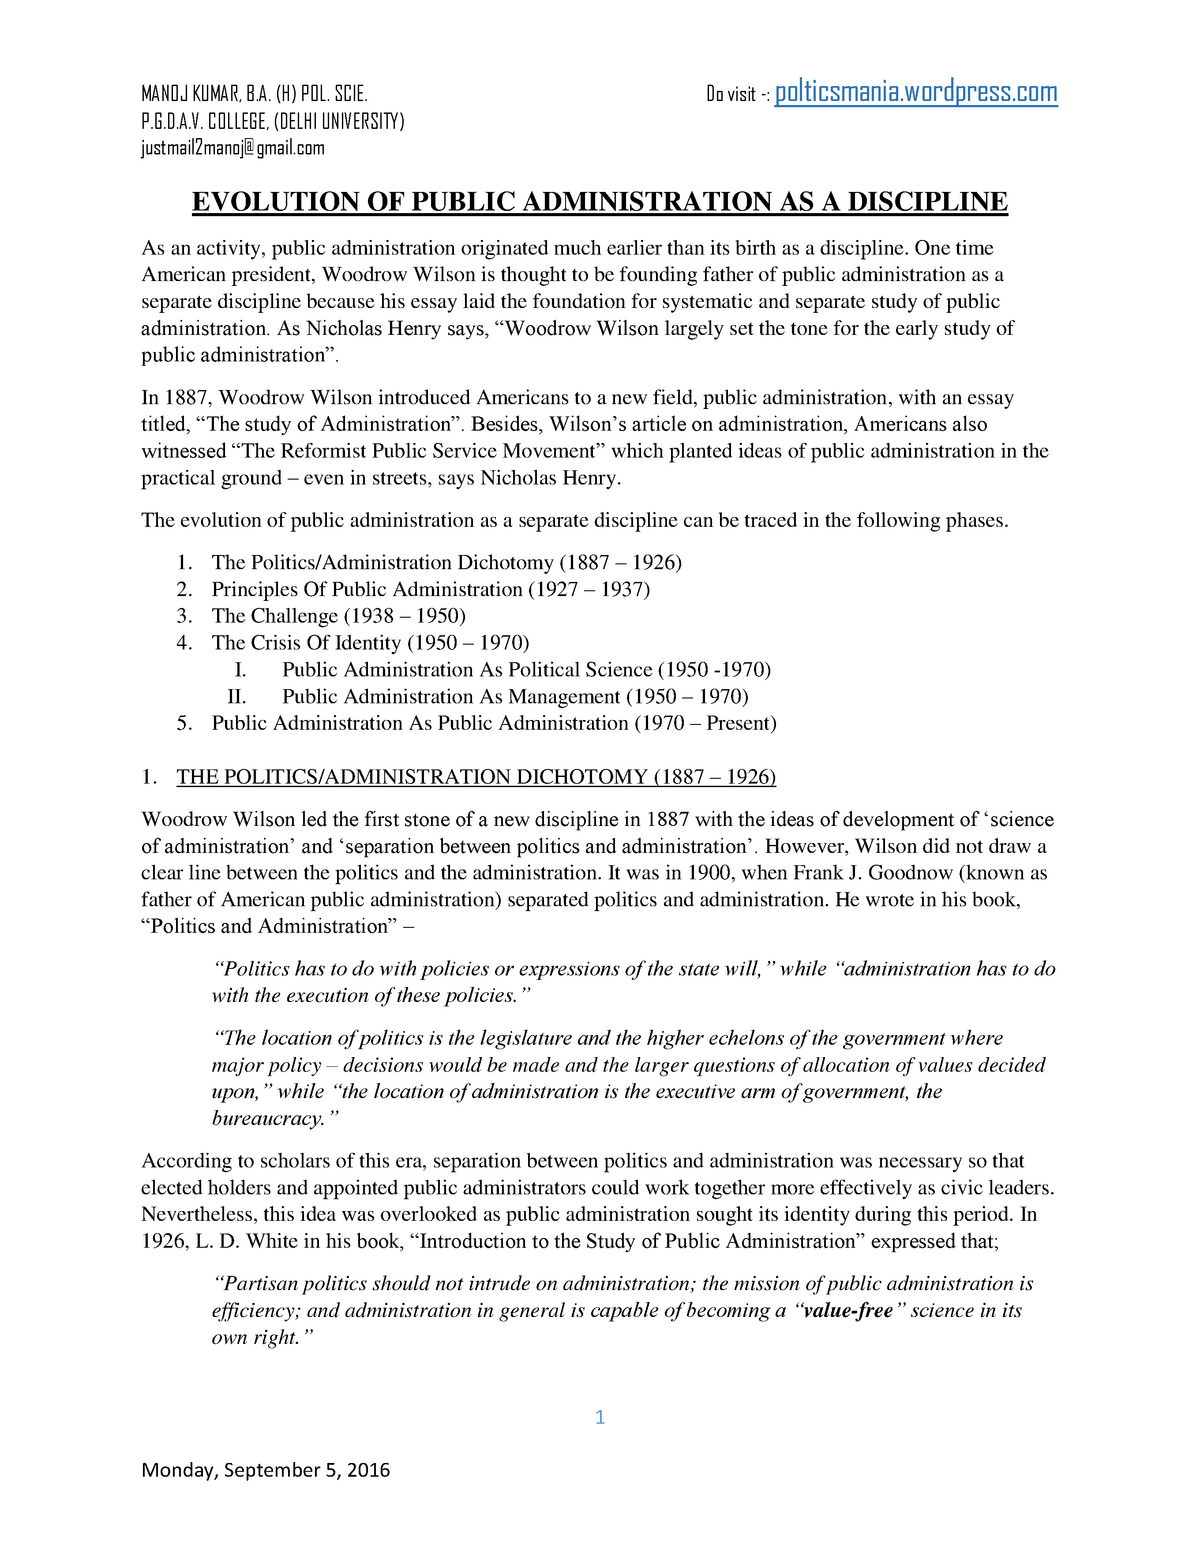 evolution of public administration as a discipline pdf